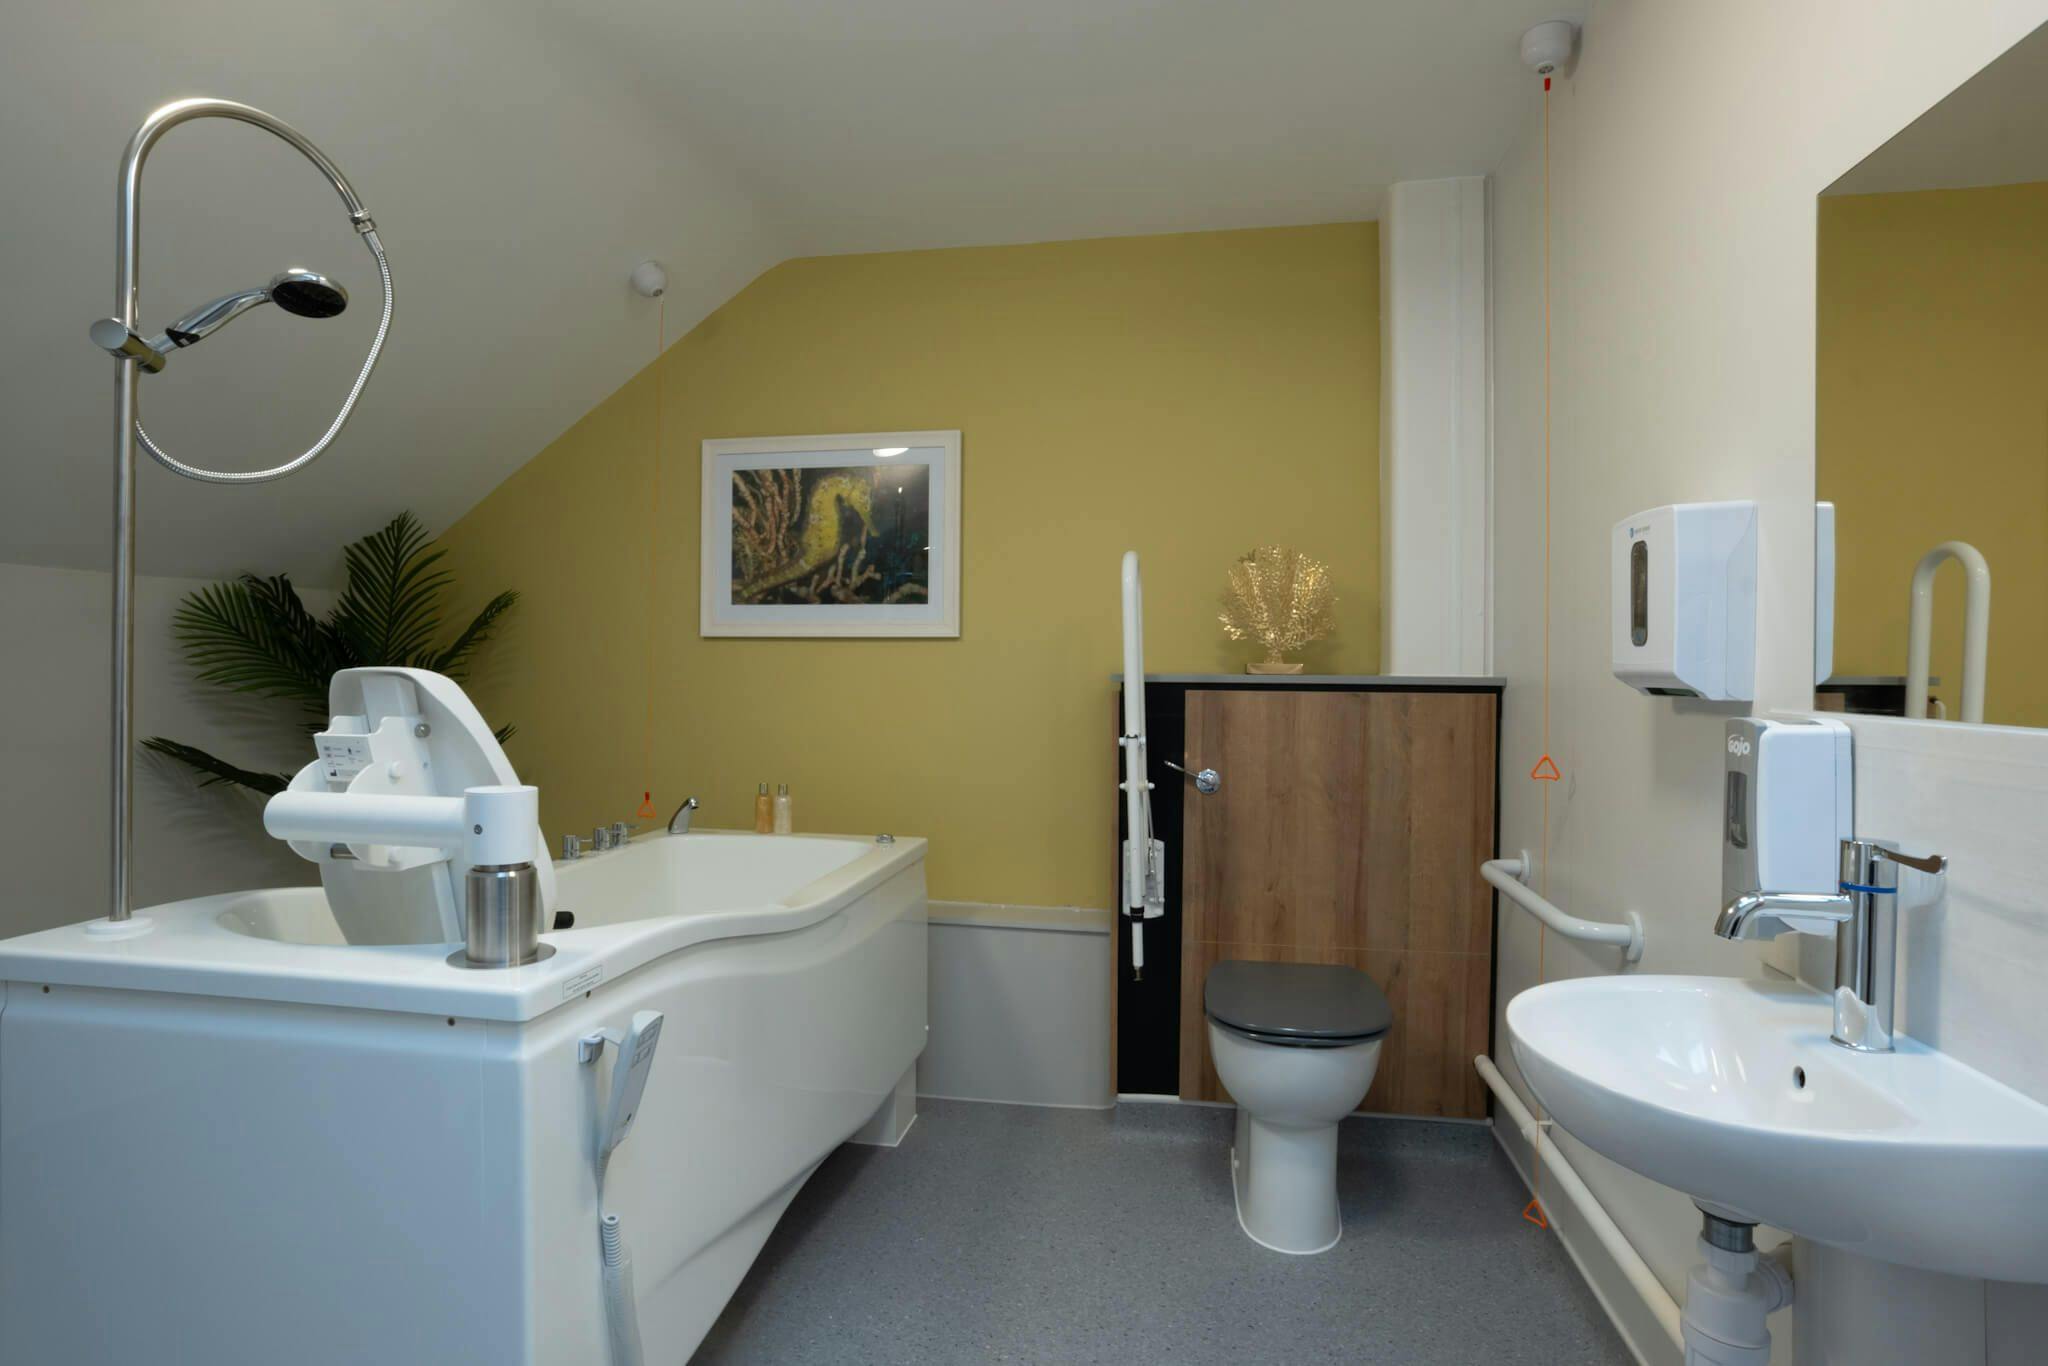 Bathroom at Rowan Park Care Home in Radstock, Somerset